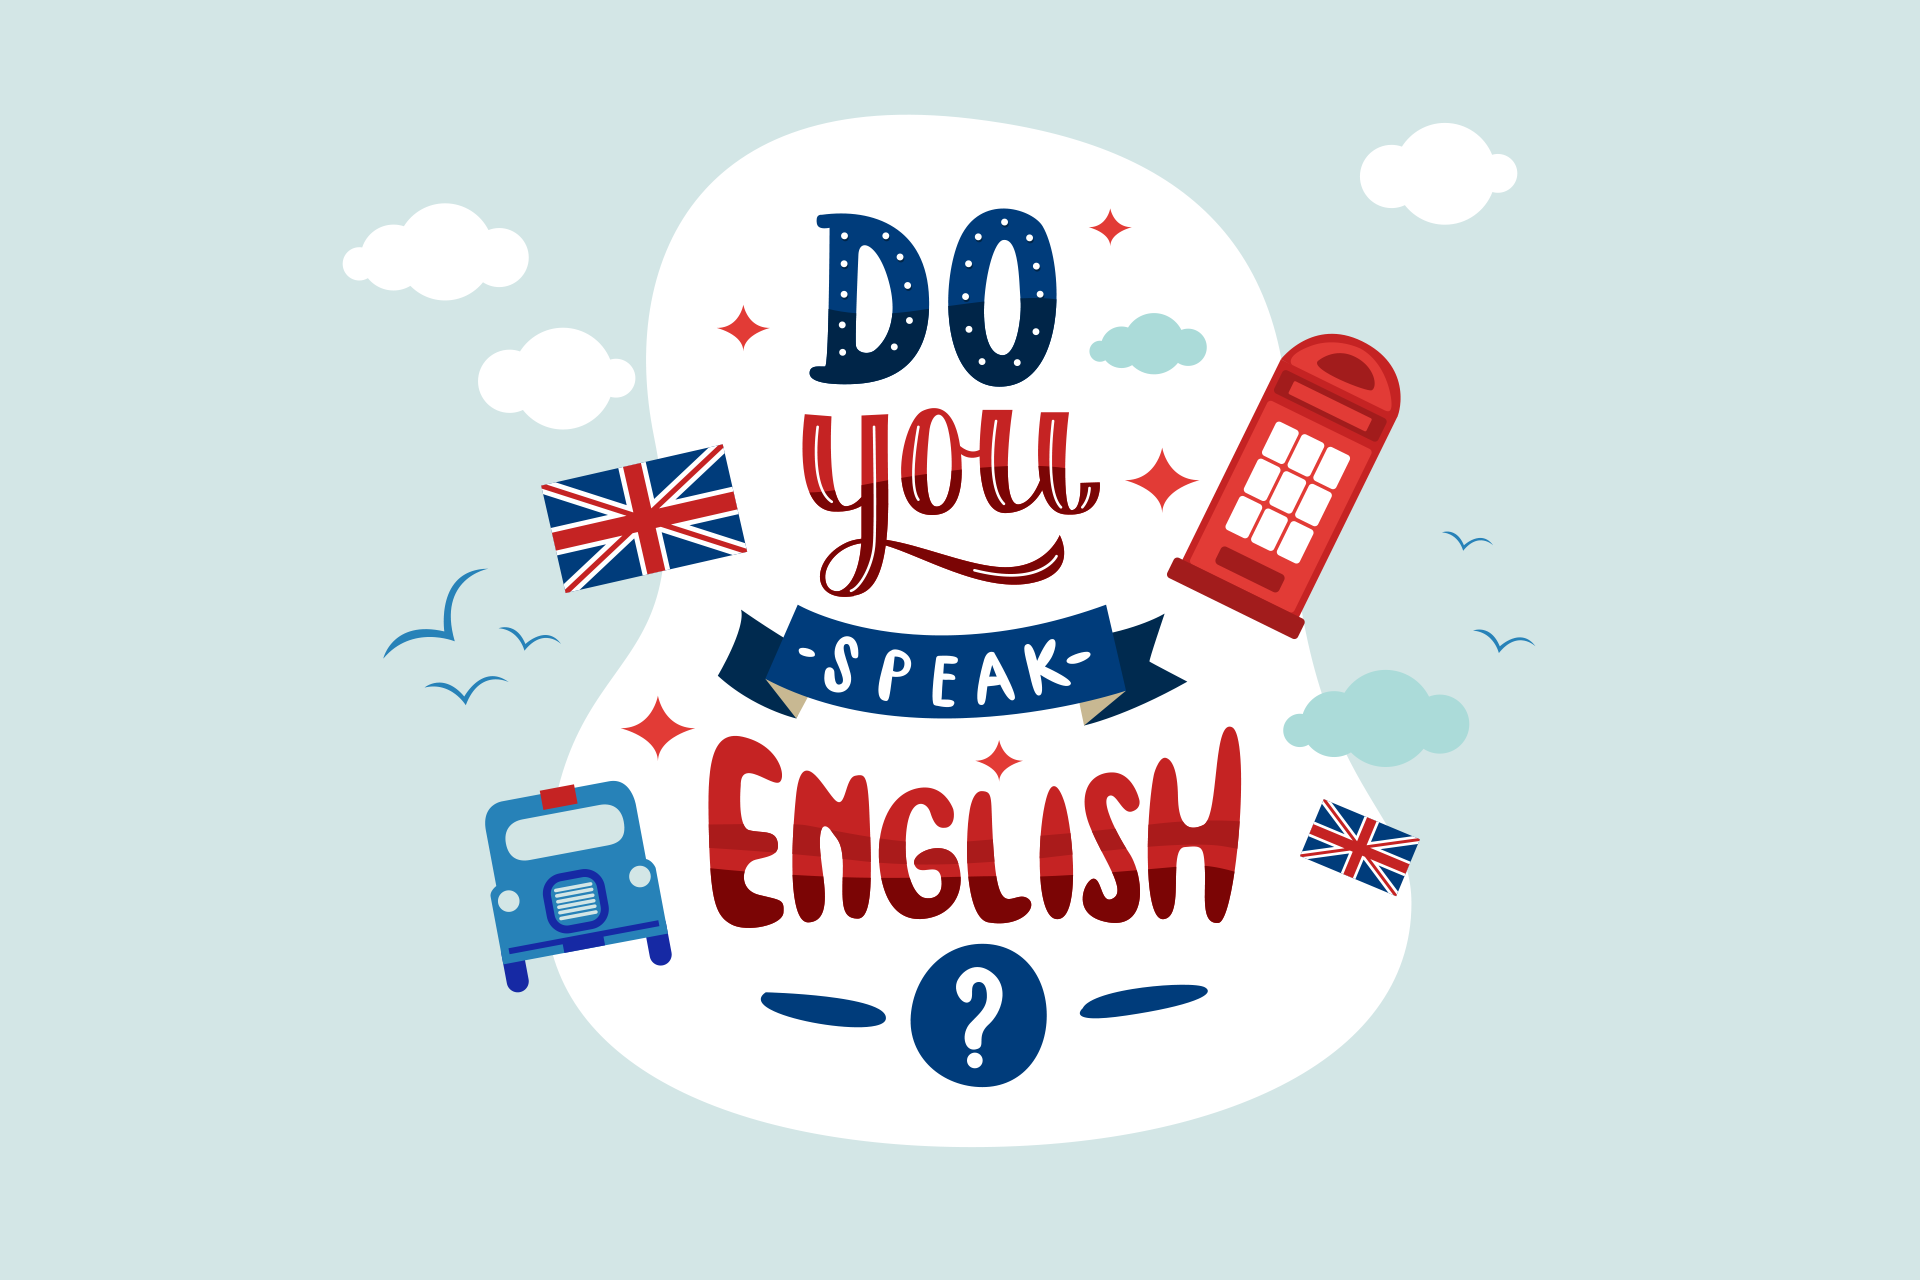 Yes can you speak english. Английский. Английский для детей. Do you speak English надпись. Английский язык иллюстрация.